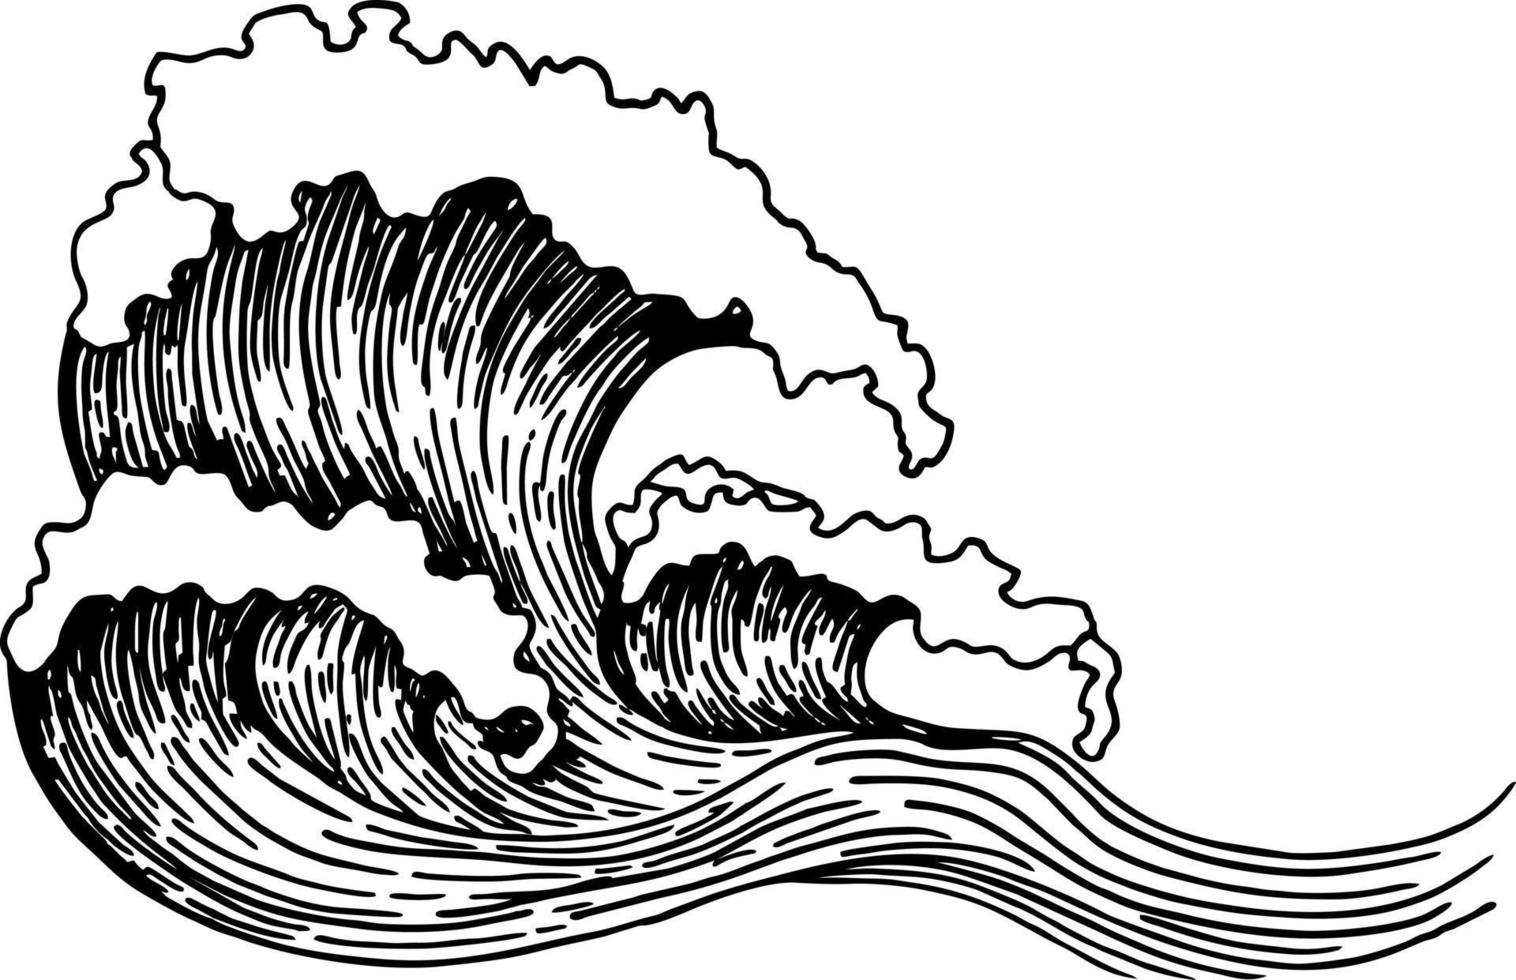 Sea waves sketch. Outline of sea wave. Hand drawn sketch. Ocean wave set hand drawn doodle illustration vector